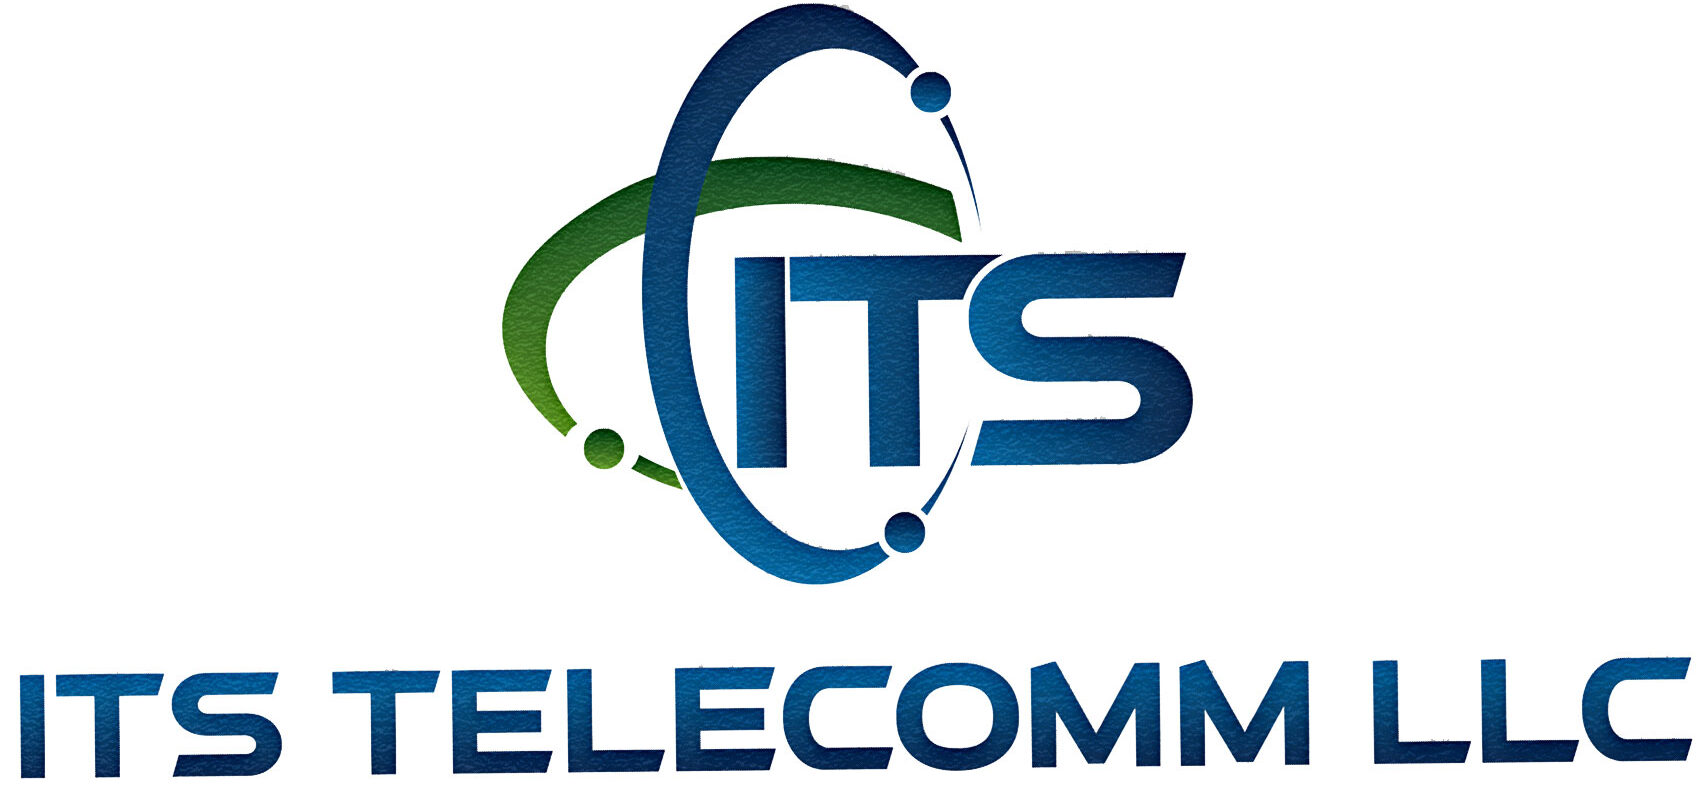 Telecommunications Contractor in Miami Florida 305-252-5000